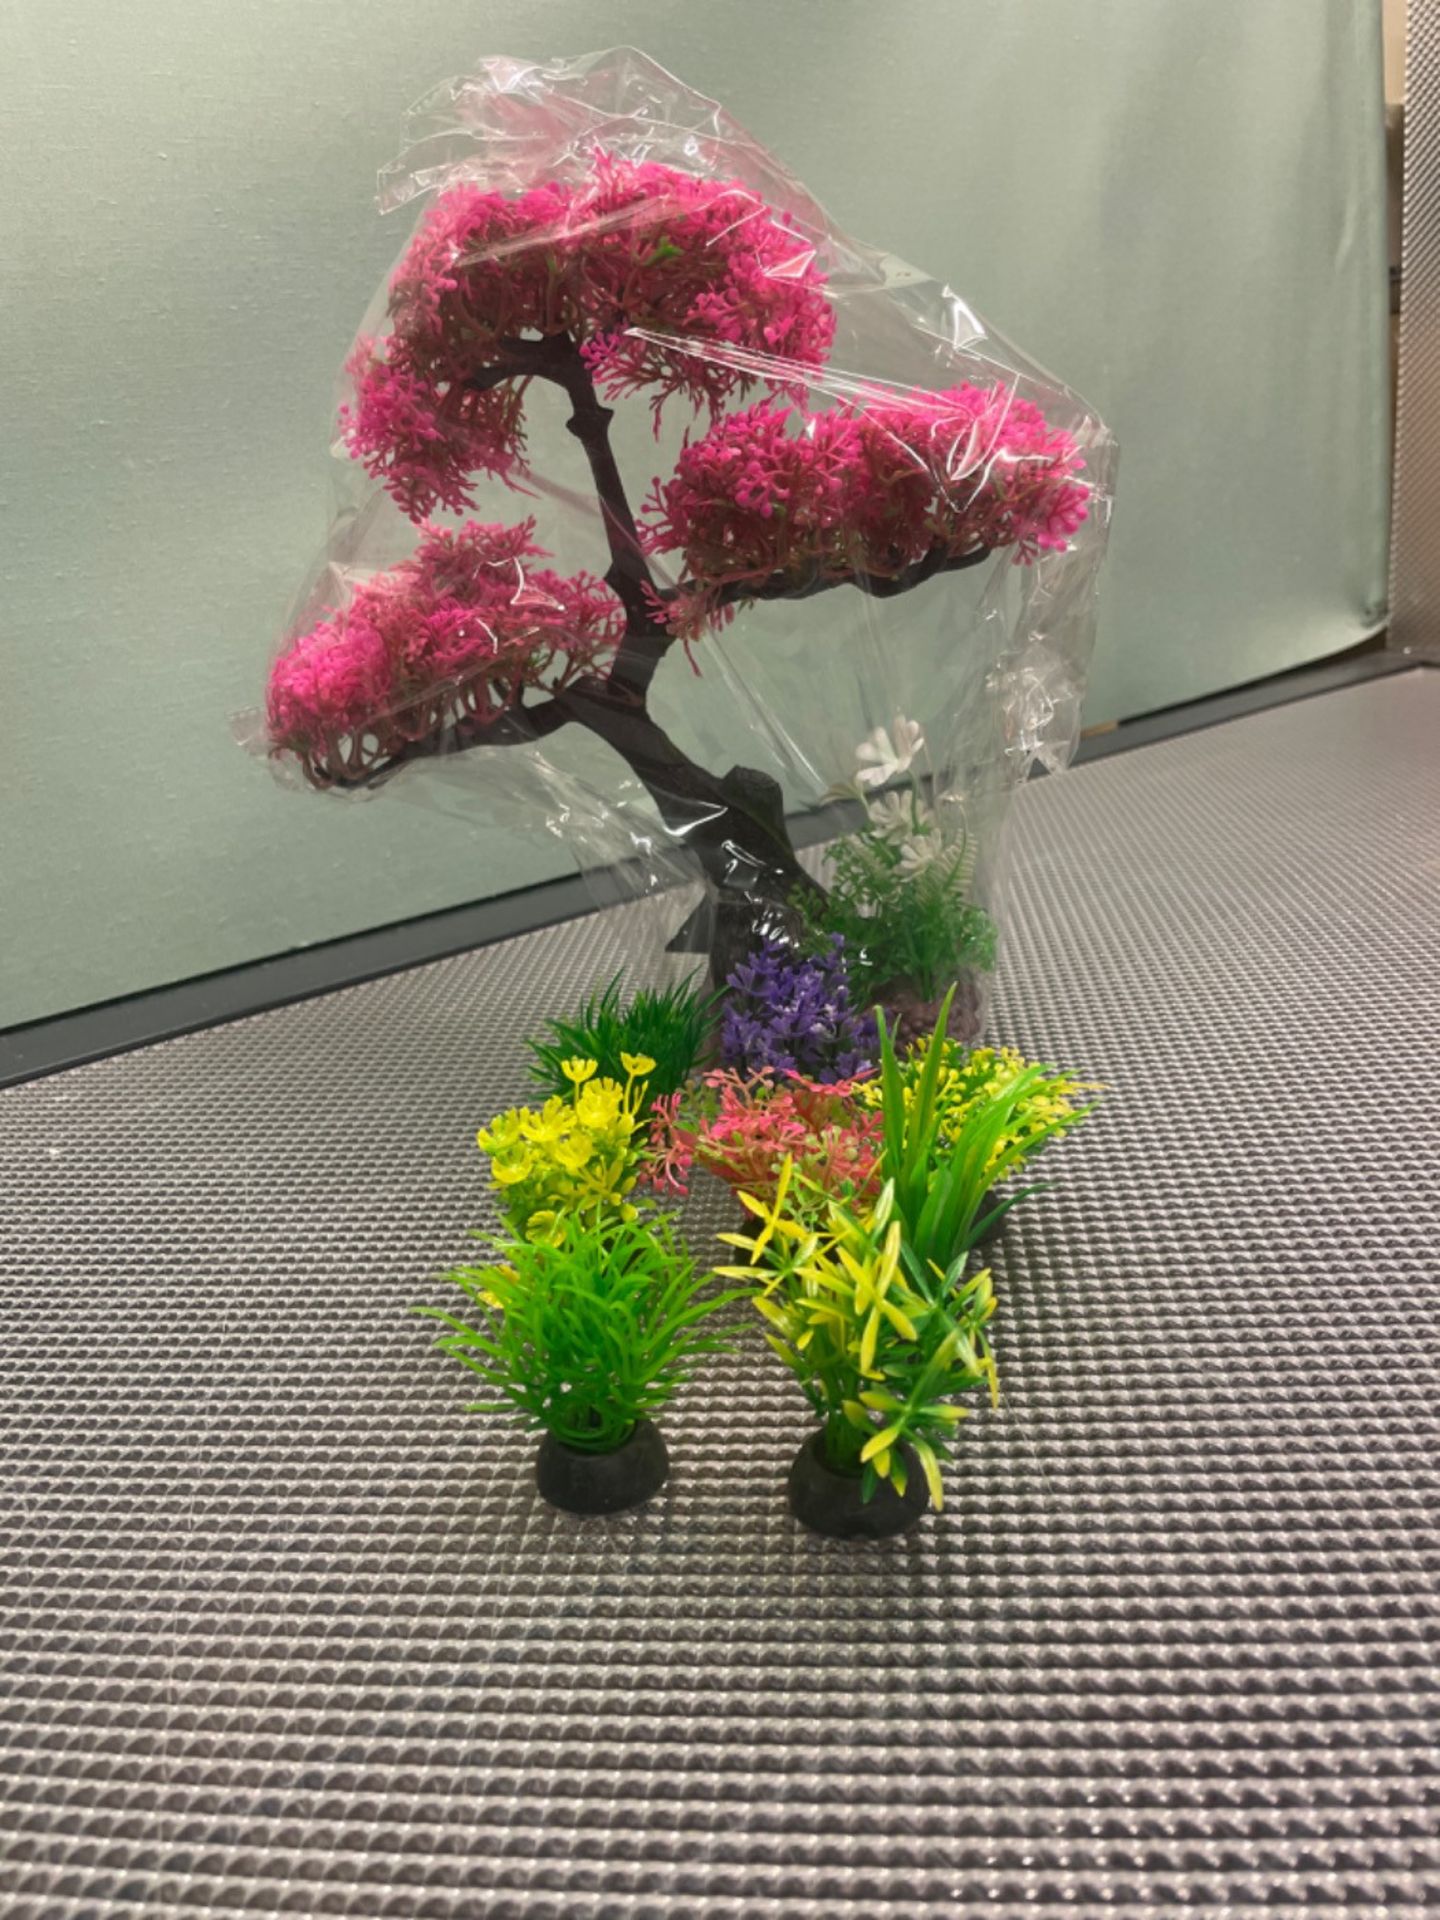 Borlech Aquarium Tree Plants Decorations, Fish Tank Plastic Plant Decor Set 10 Pieces (Pink) - Image 3 of 3